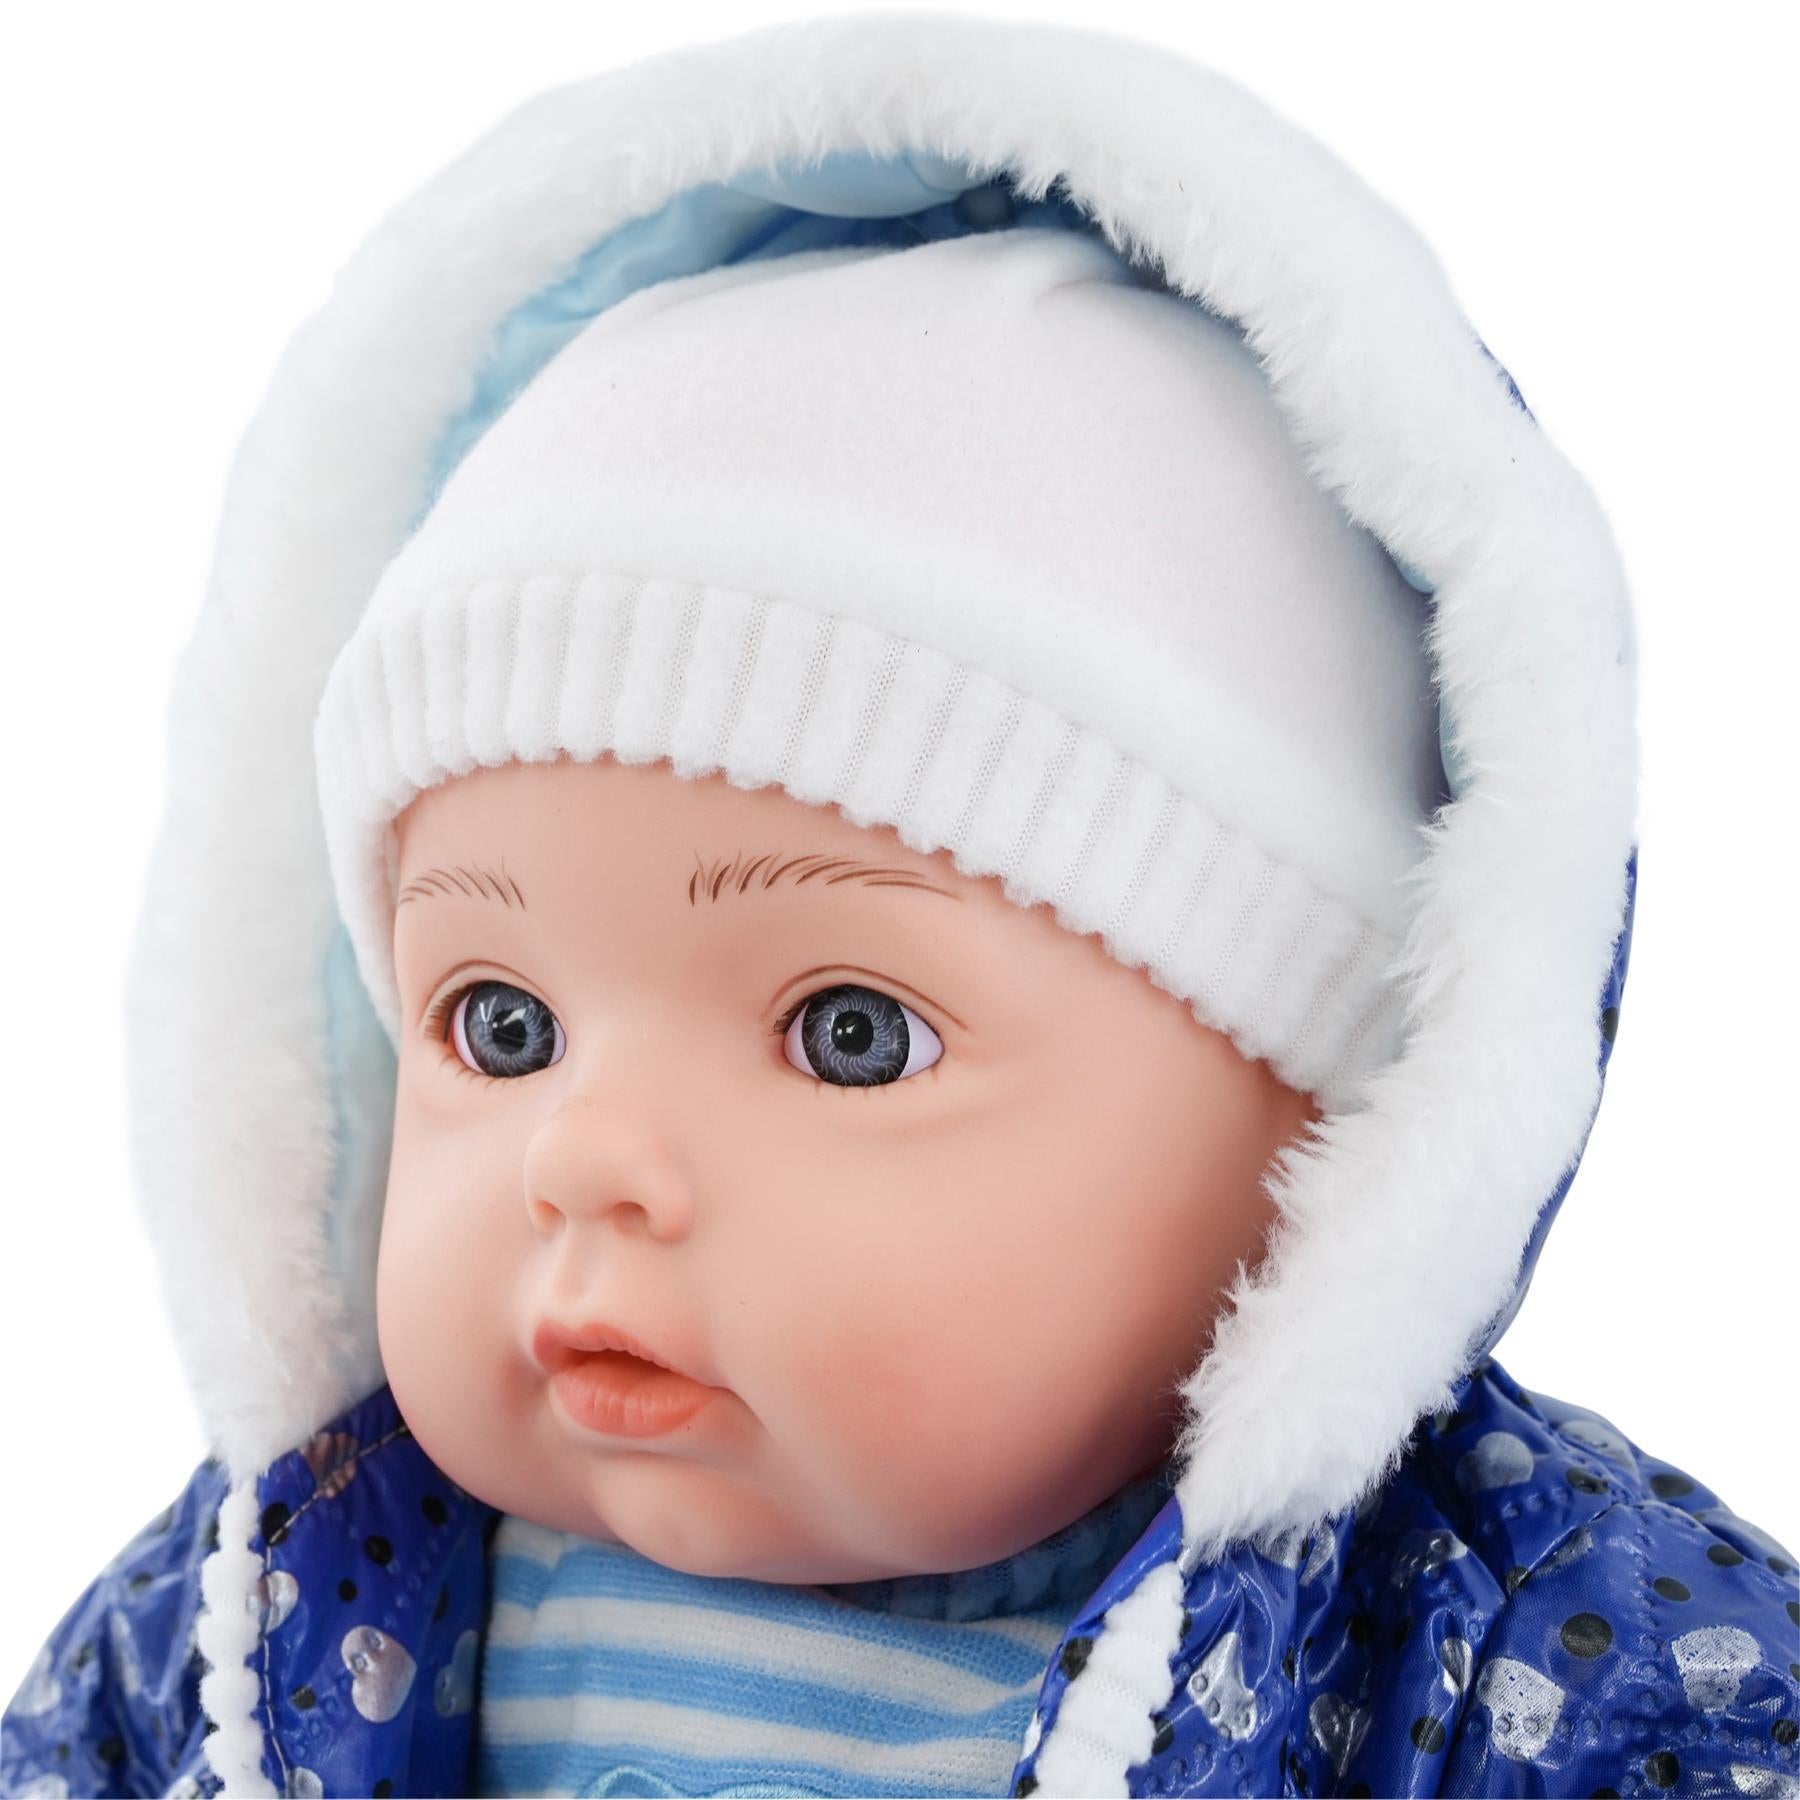 Blue Bibi Baby Doll Toy With Dummy & Sounds by BiBi Doll - UKBuyZone